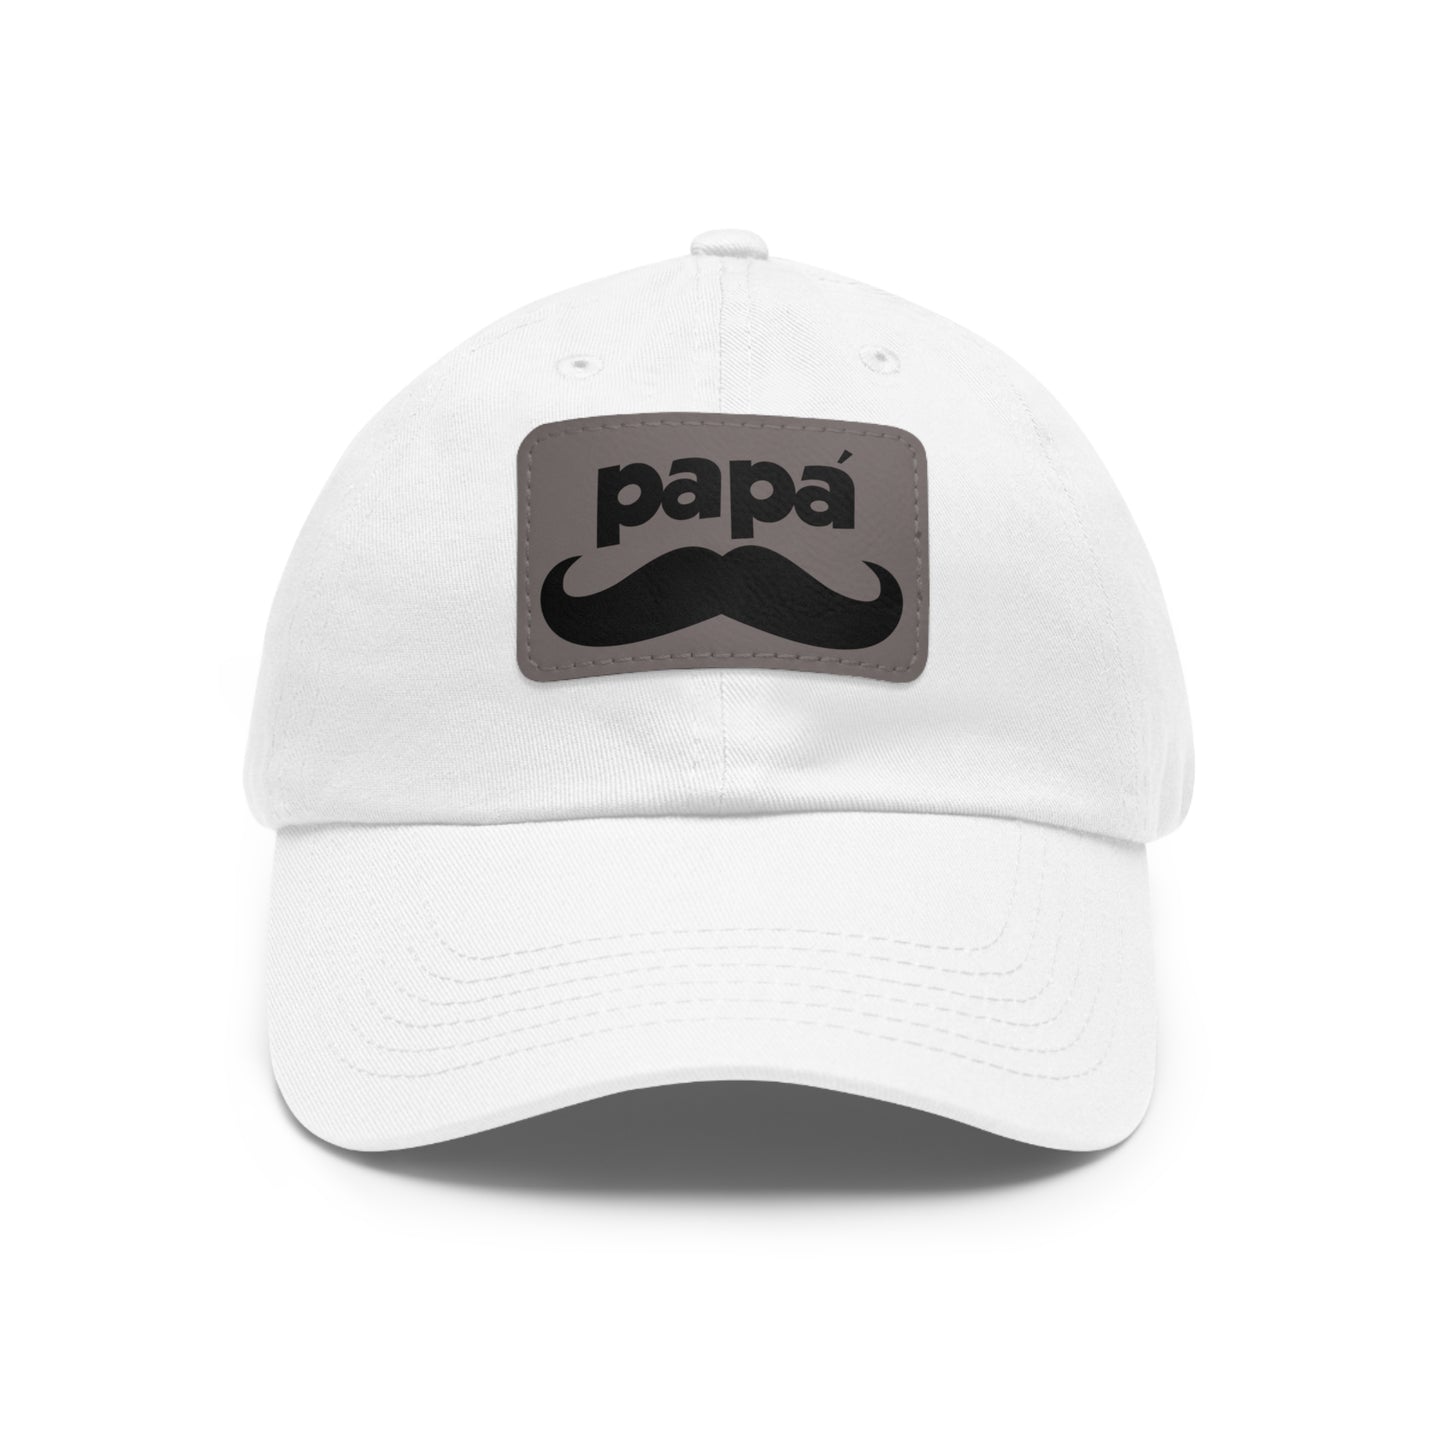 Gorra para papá